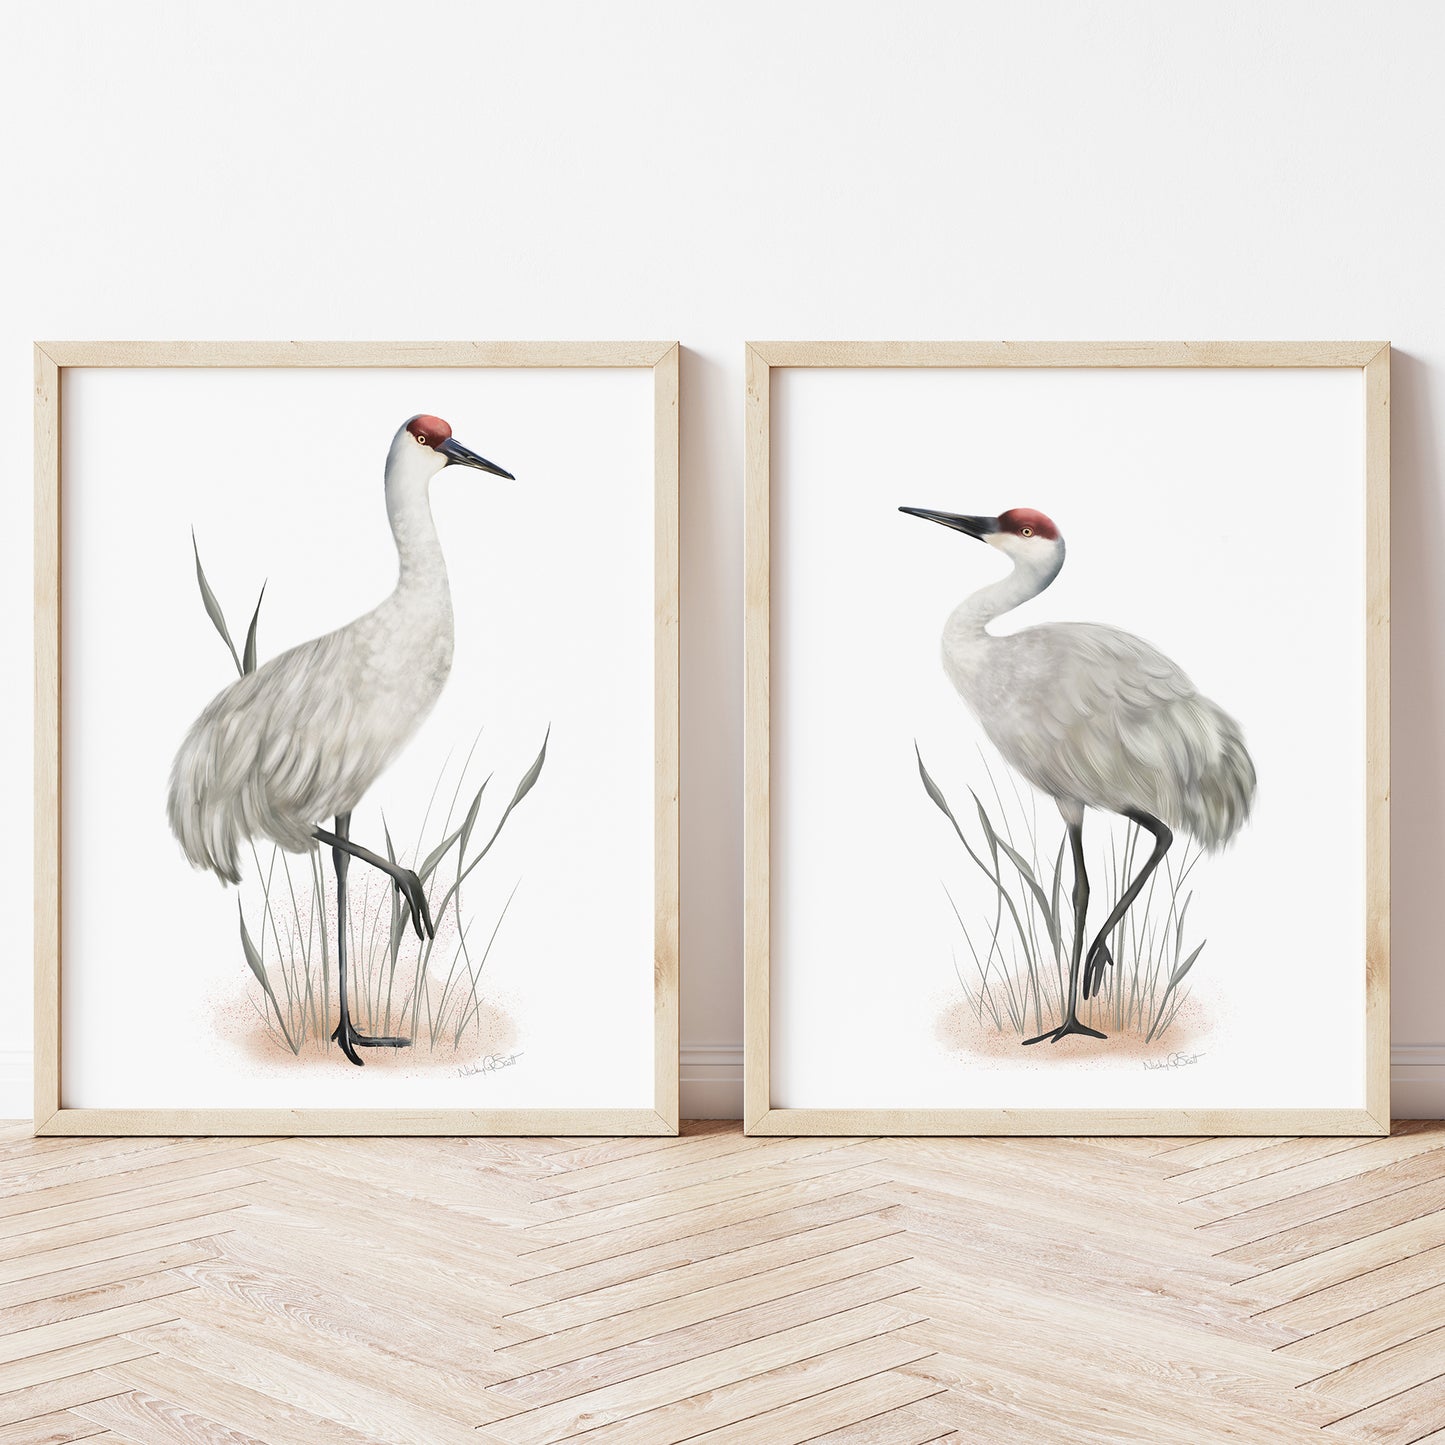 Sandhill Crane Bird Art Prints - Set of 2 - Studio Q - Art by Nicky Quartermaine Scott